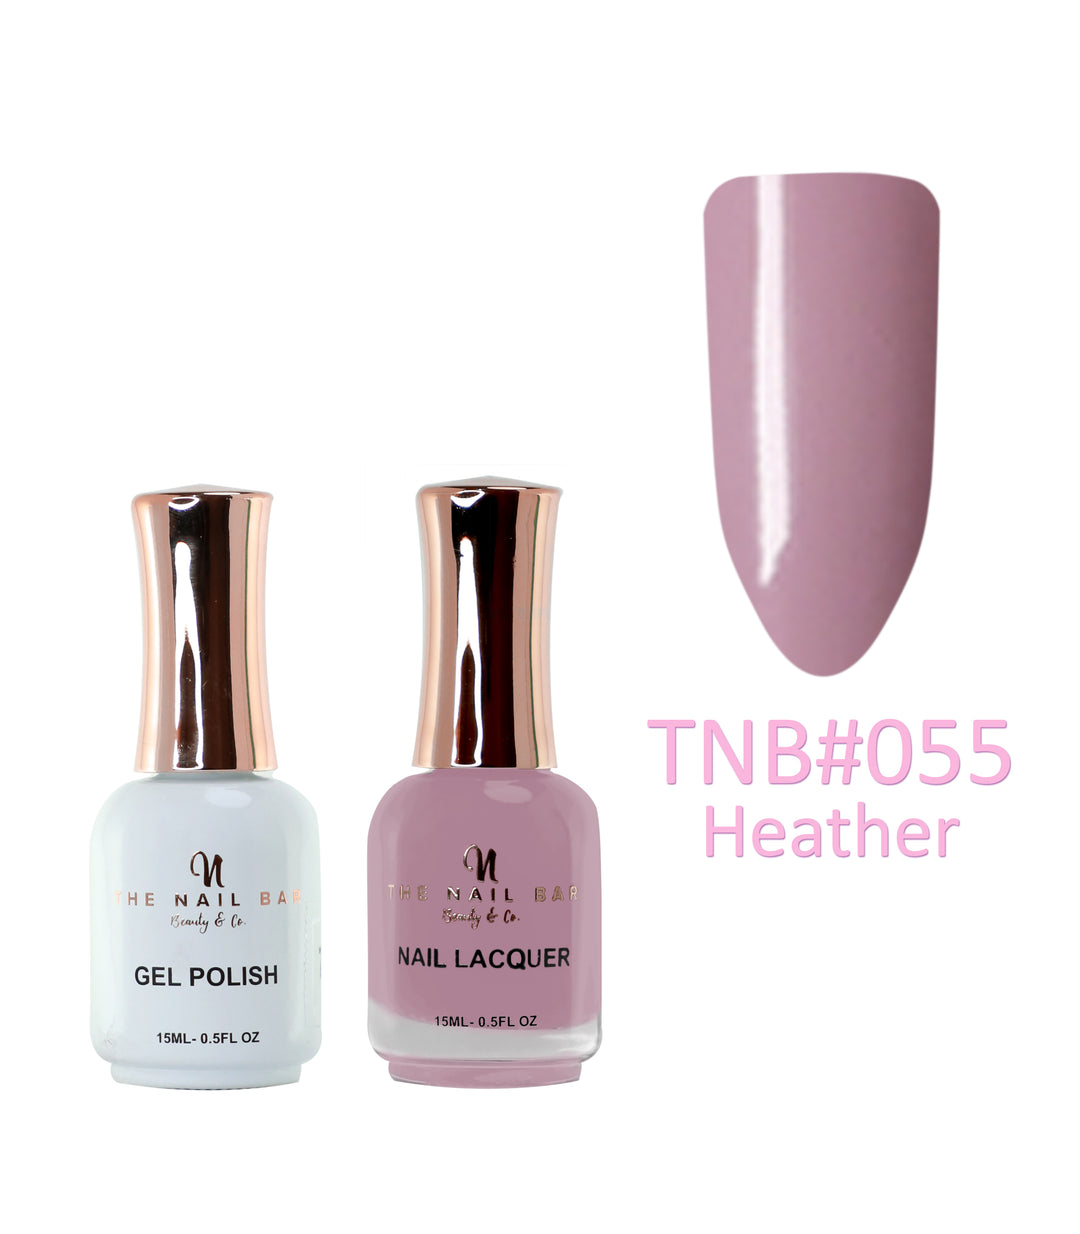 Dual Polish/Gel colour matching (15ml) - Heather - The Nail Bar Beauty & Co.